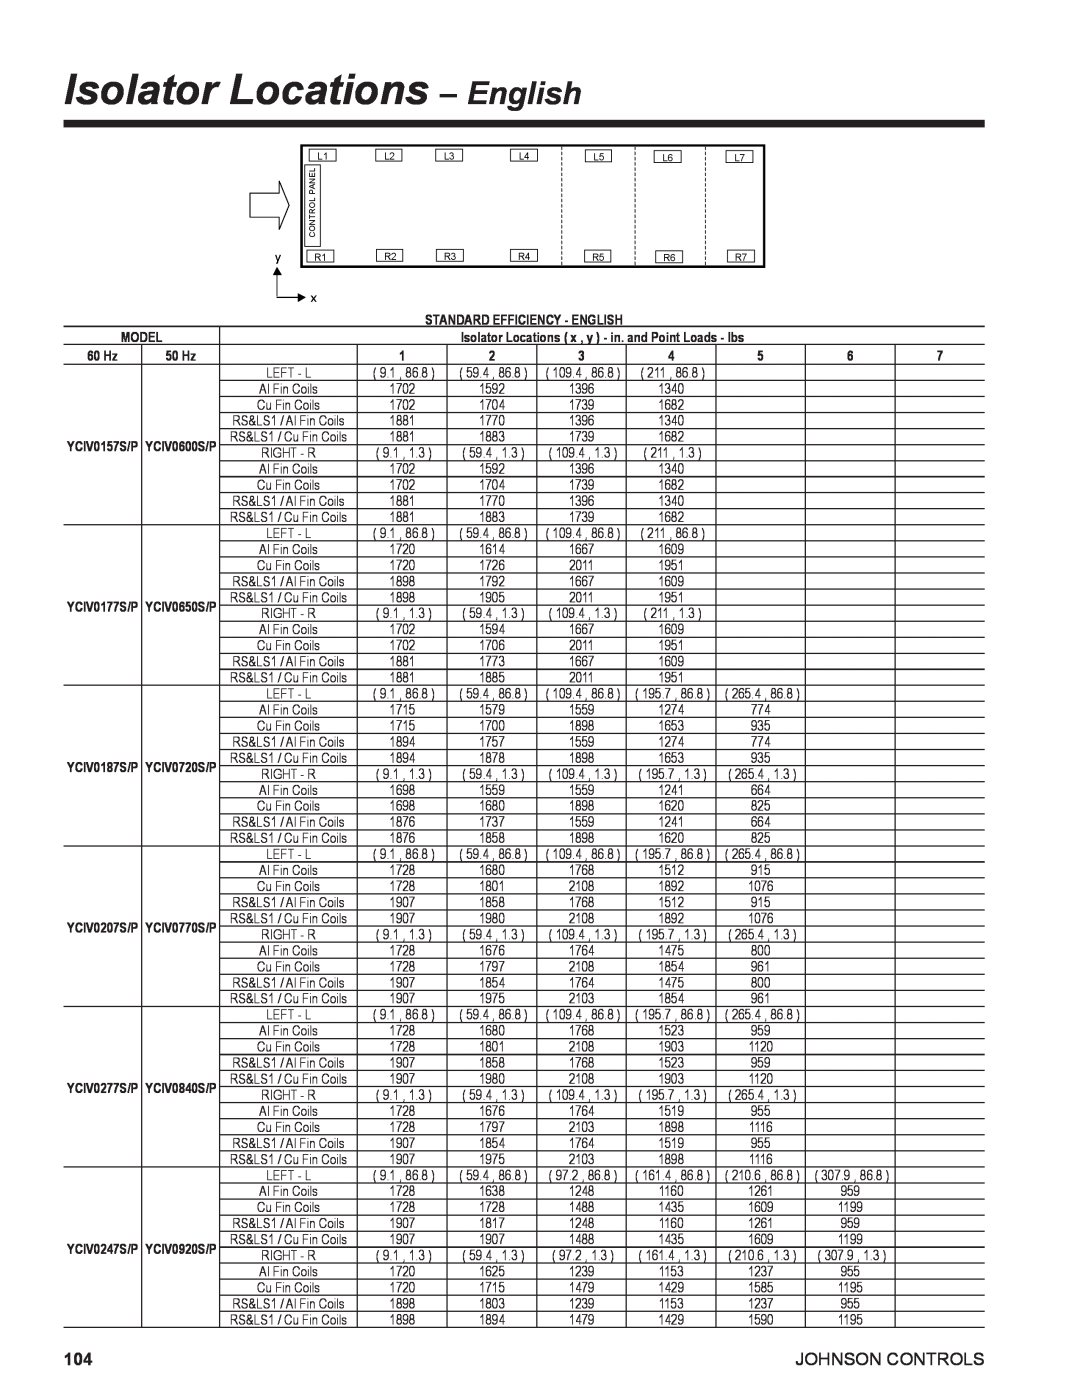 York R134A manual Isolator Locations – English, Johnson Controls 